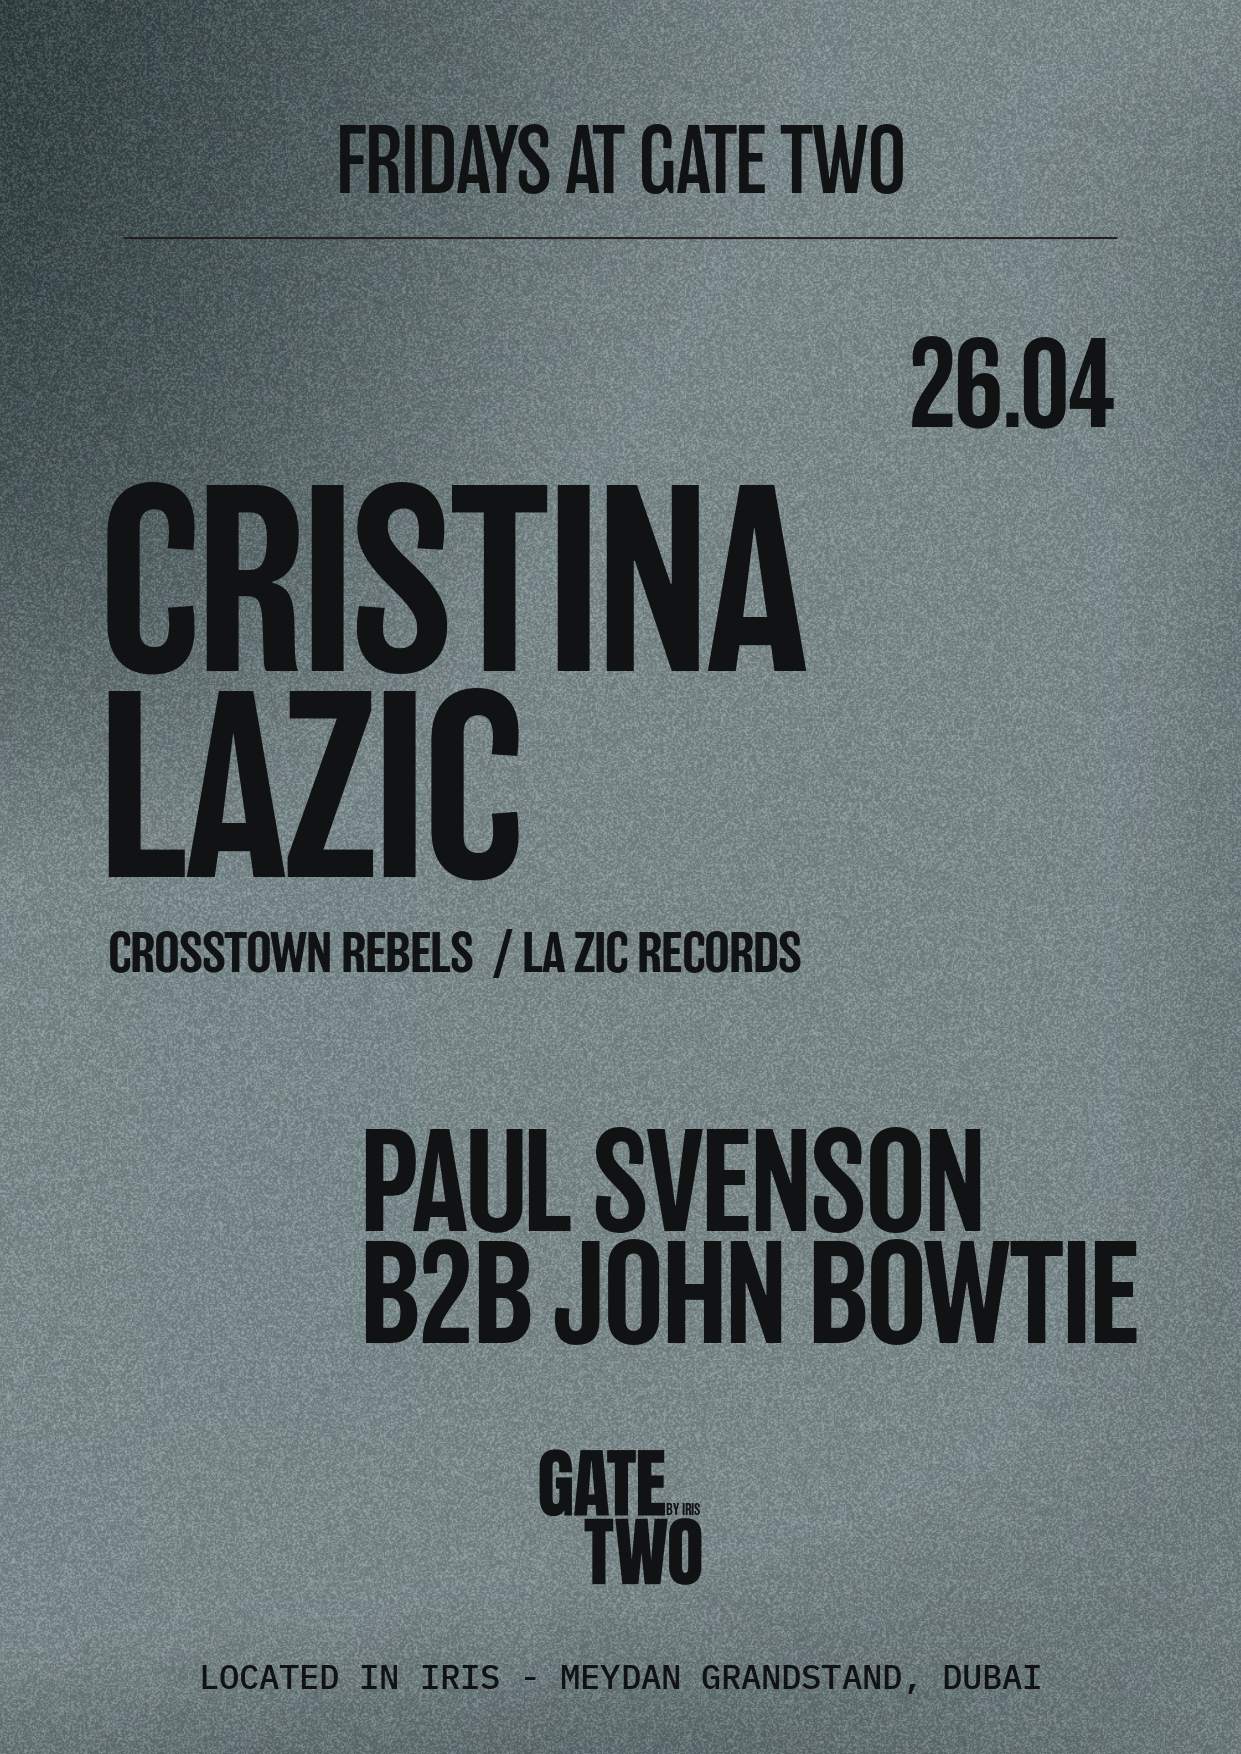 Fridays AT GATE TWO with Cristina Lazic / John Bowtie b2b Paul Svenson - フライヤー表